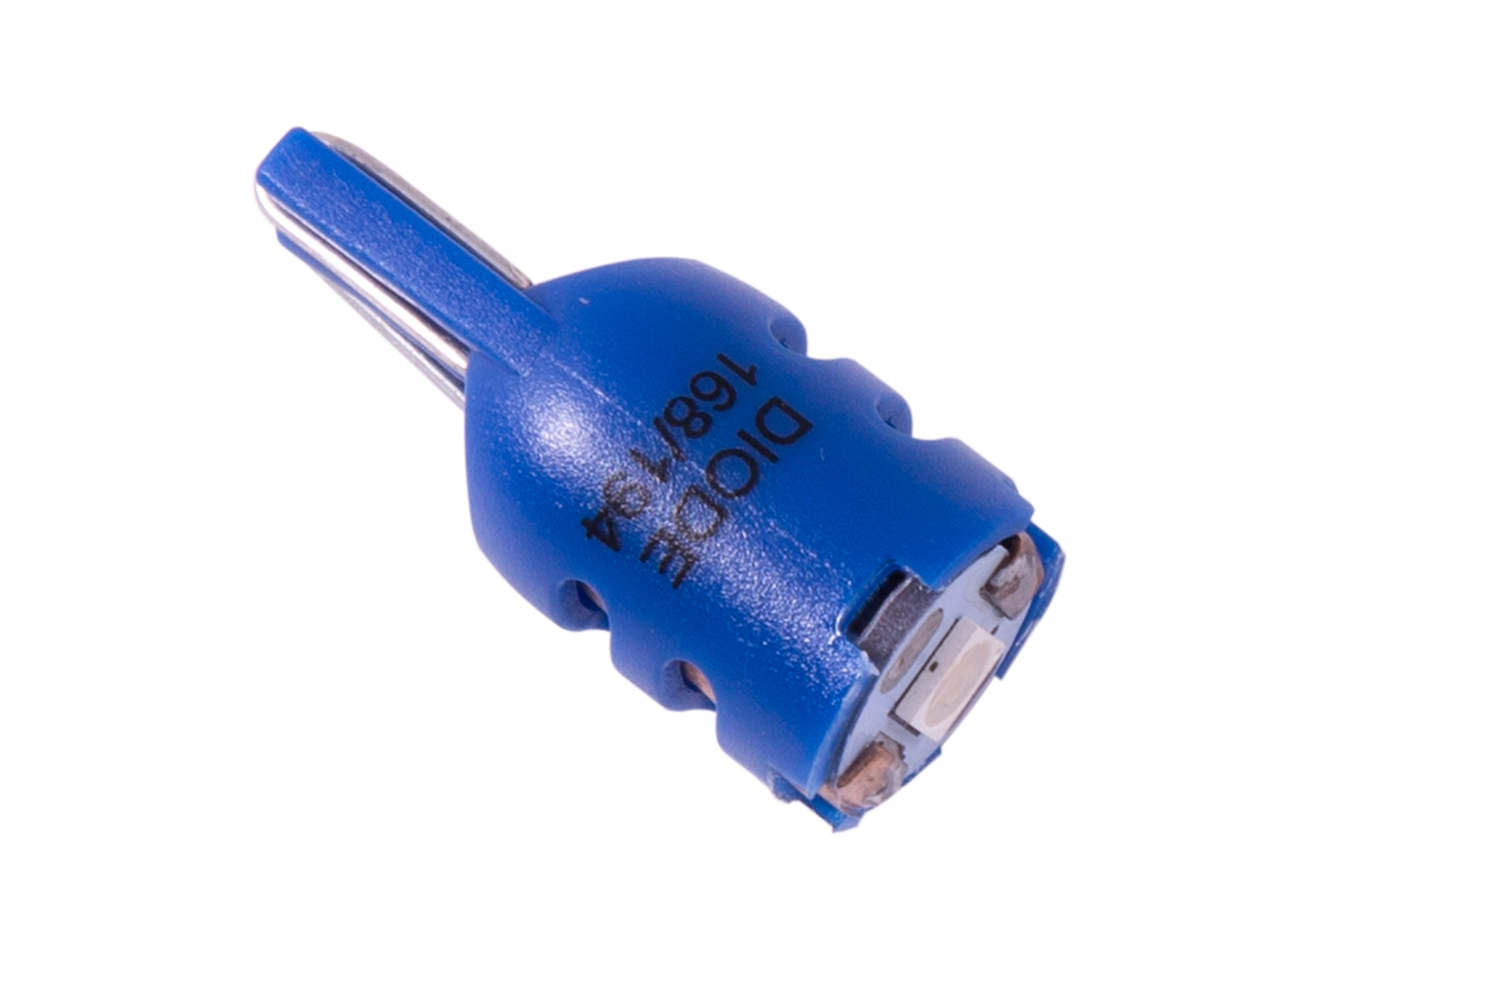 194 LED Bulb HP5 LED Blue Short Single Diode Dynamics